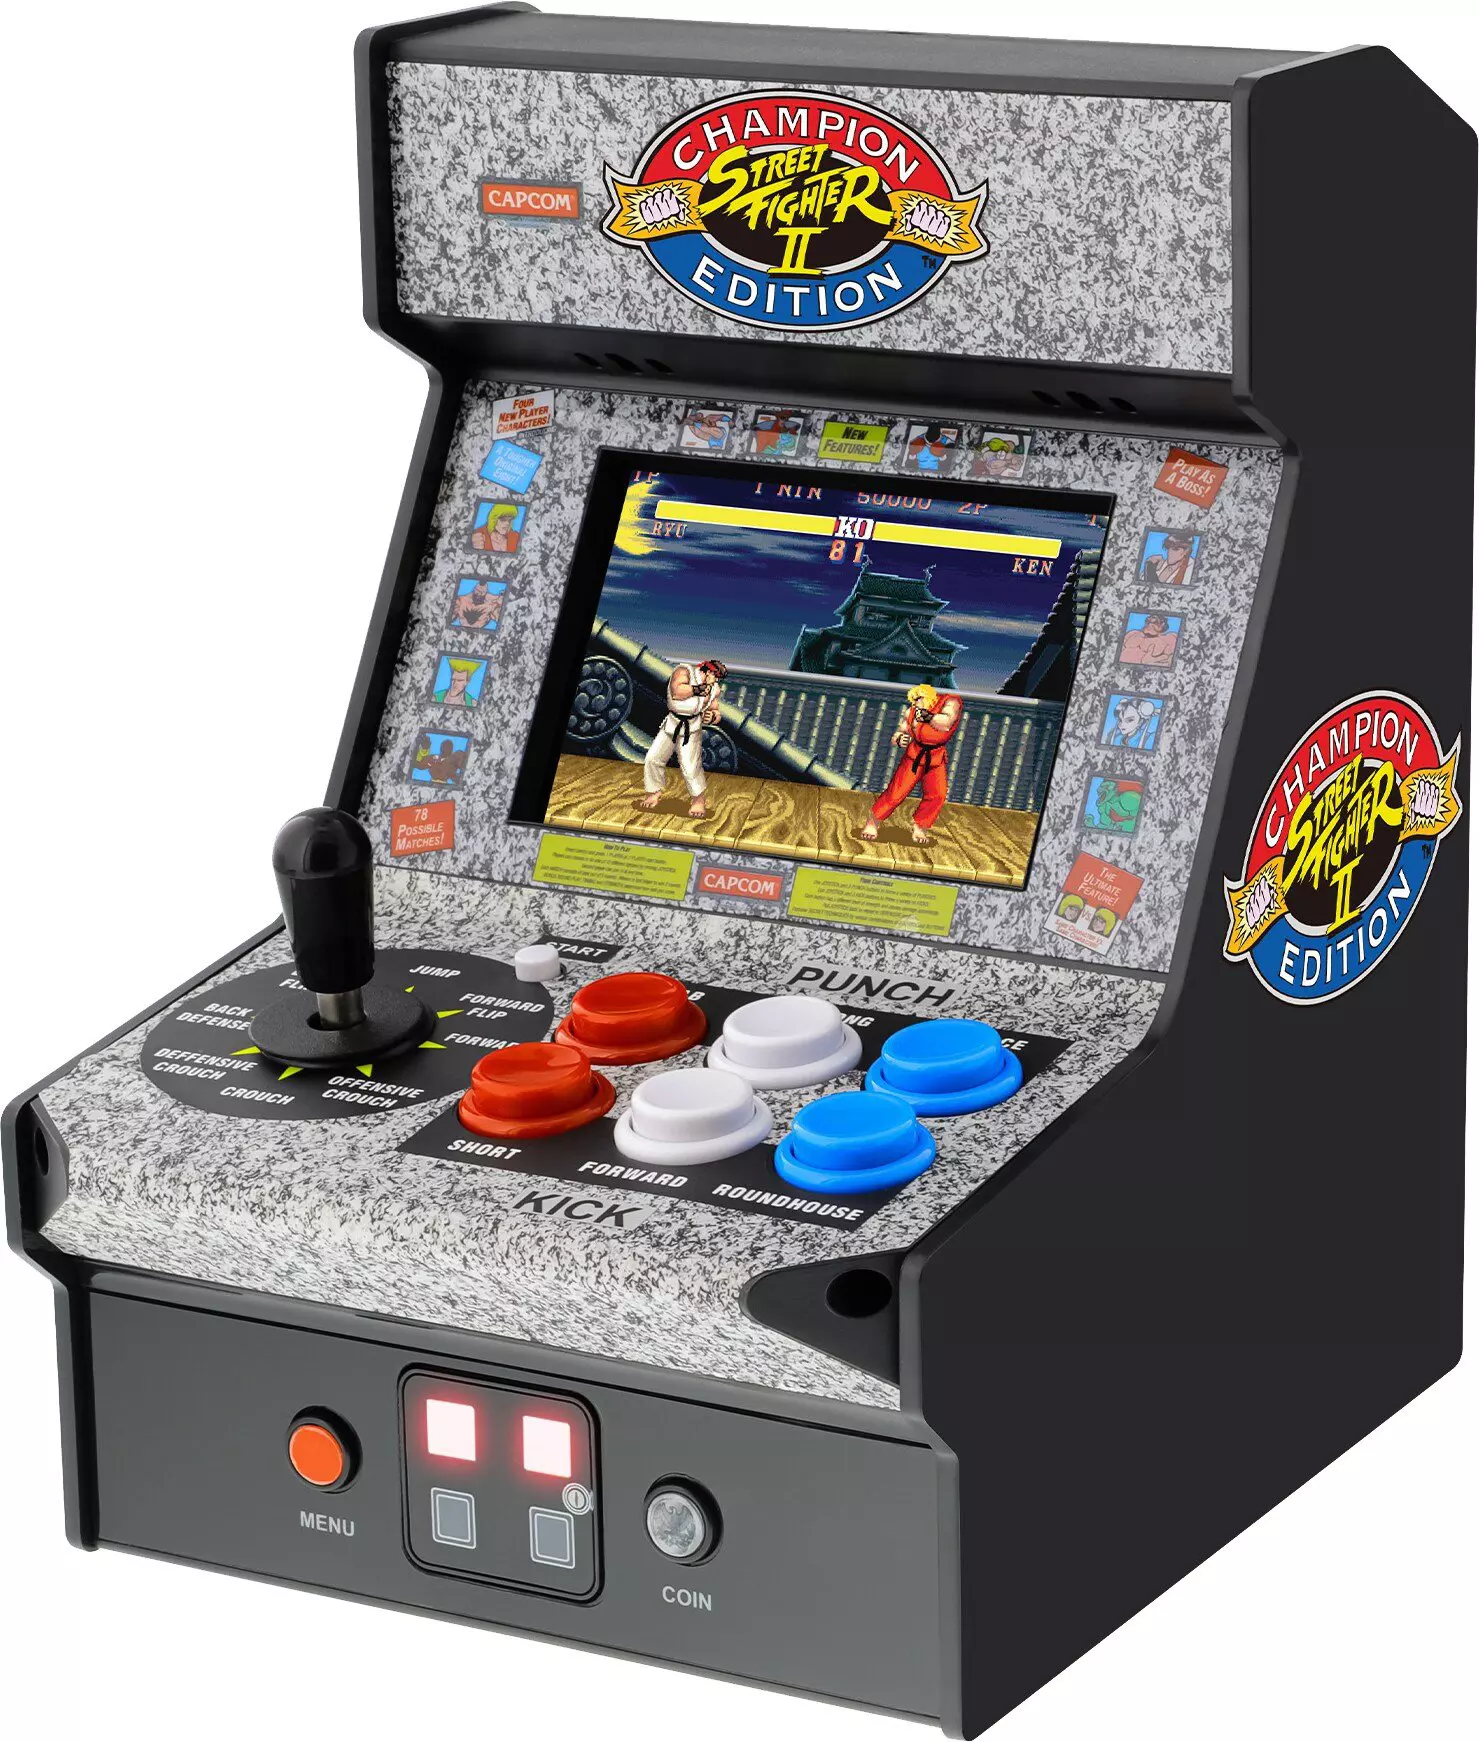 My Arcade Street Fighter Champion Edition